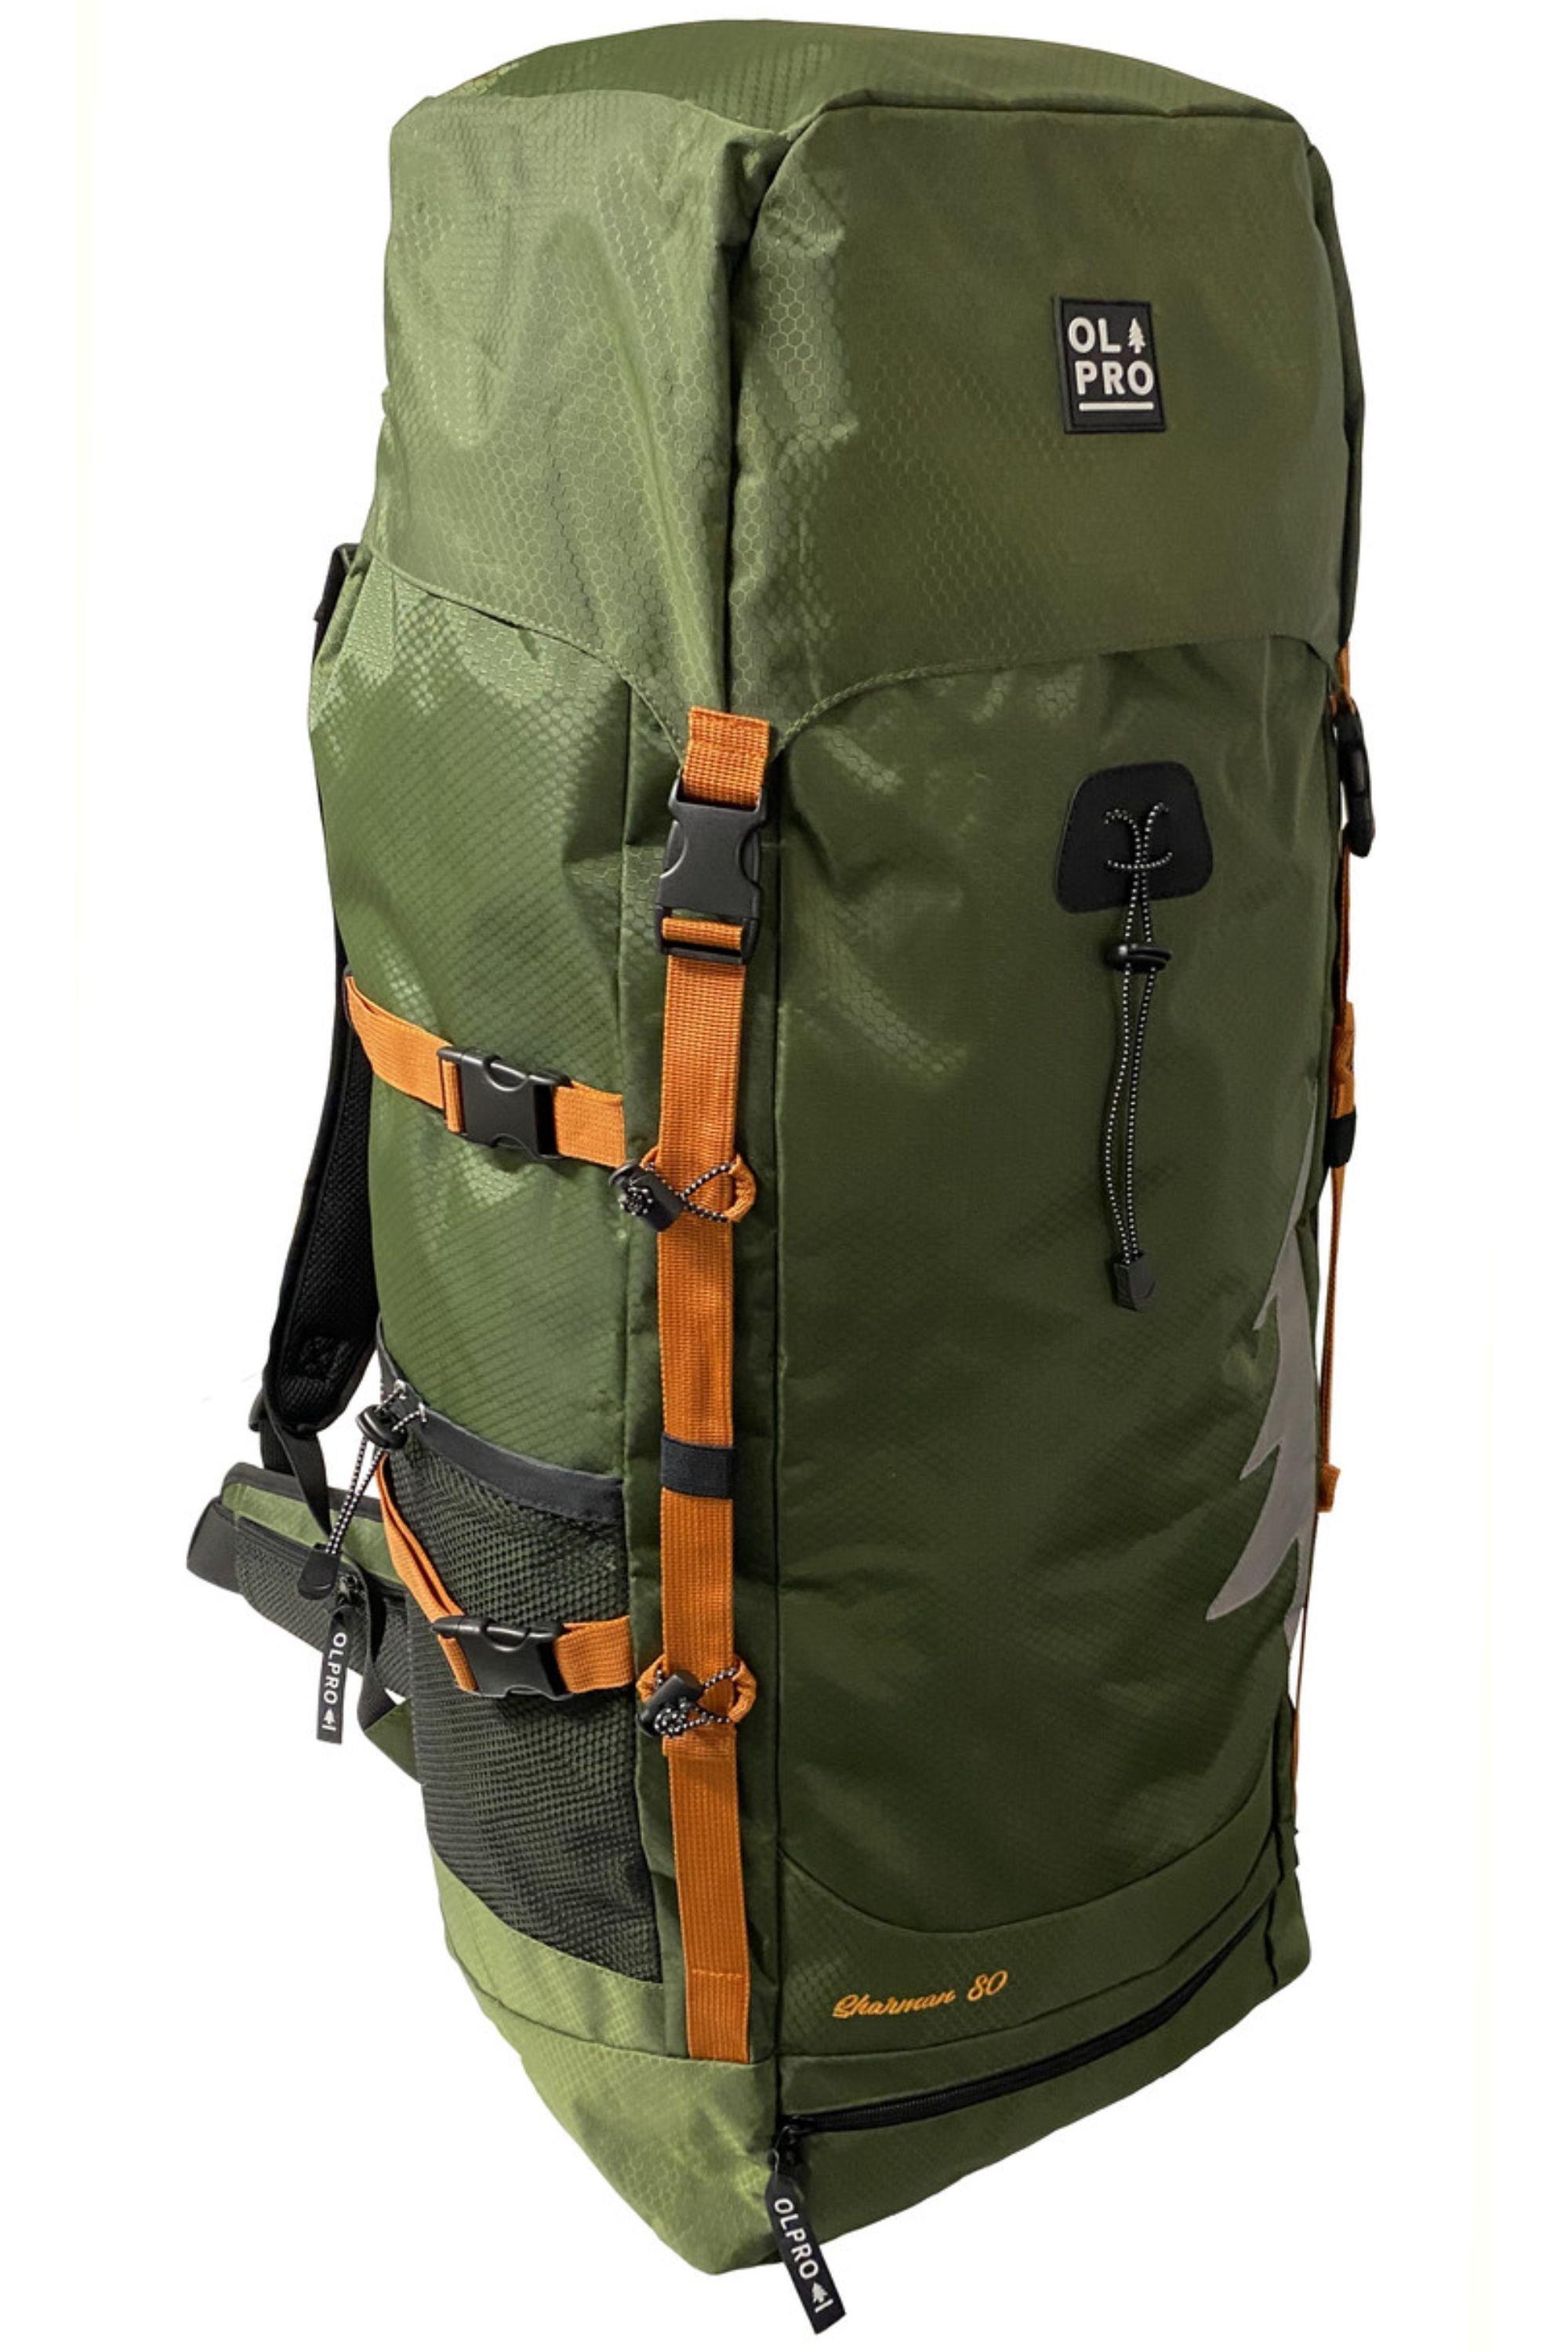 OLPRO 80L Rucksack Bag Green